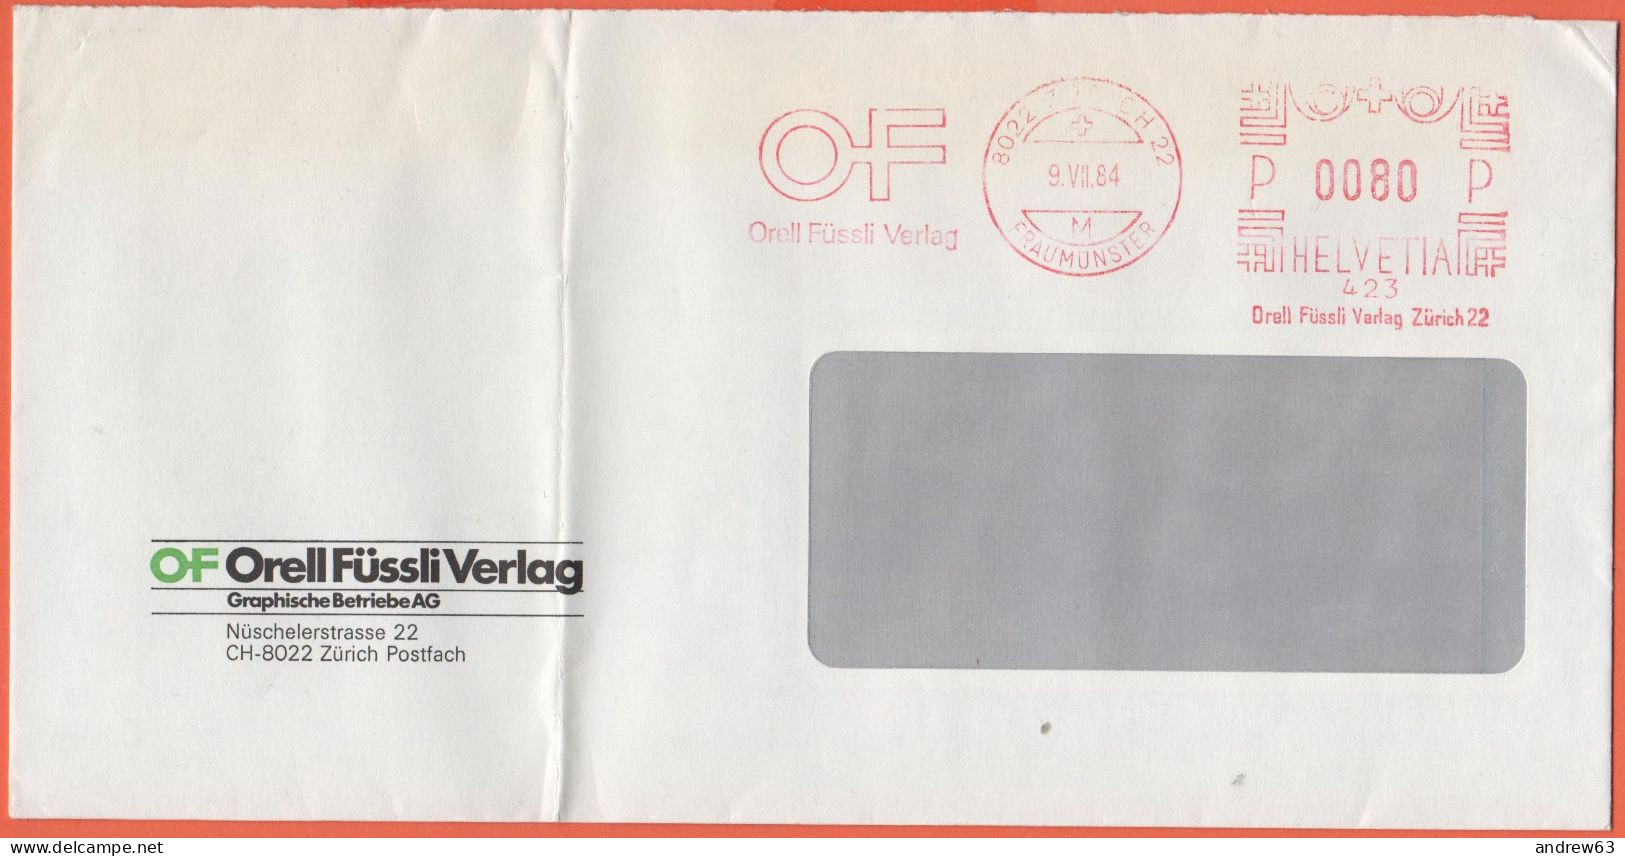 SVIZZERA - SUISSE - HELVETIA - 1984 - 0080 EMA, Red Cancel + Flamme OF - Orell Füssli Verlag - Viaggiata Da Zürich - Frankiermaschinen (FraMA)